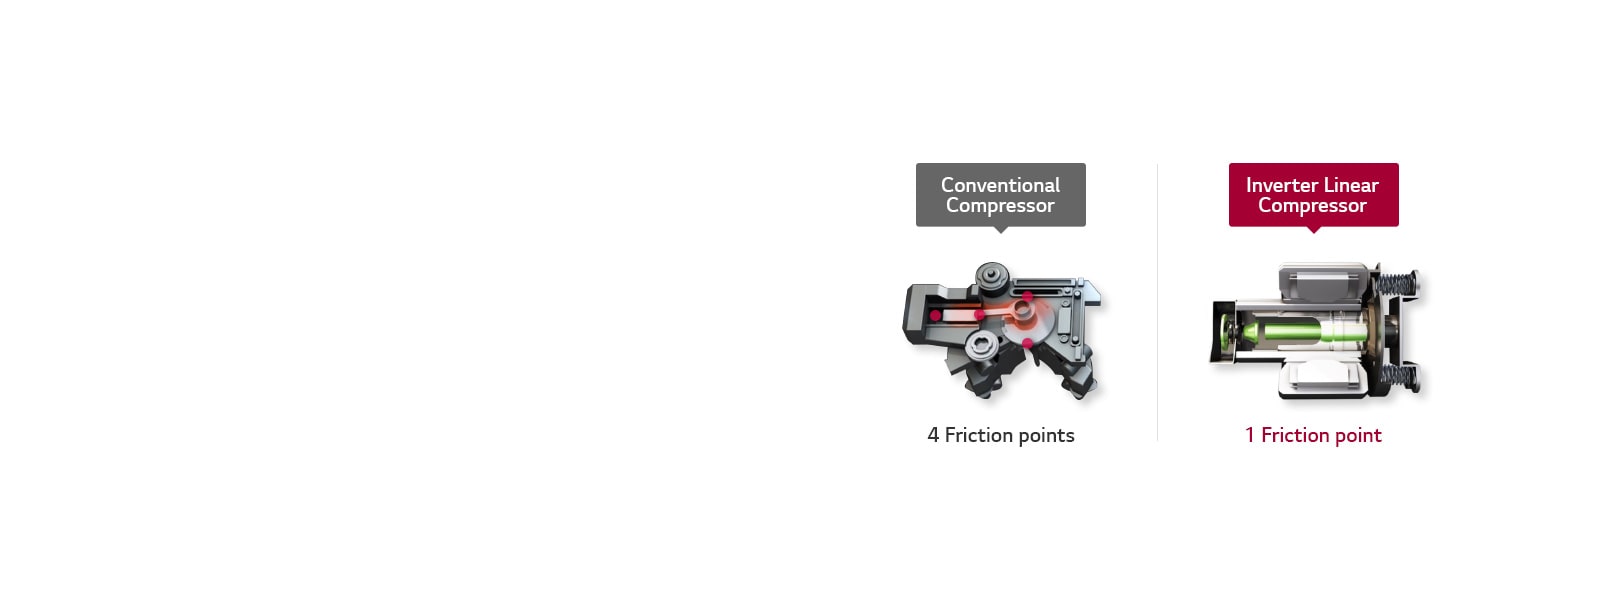 Why Inverter Linear Compressor?